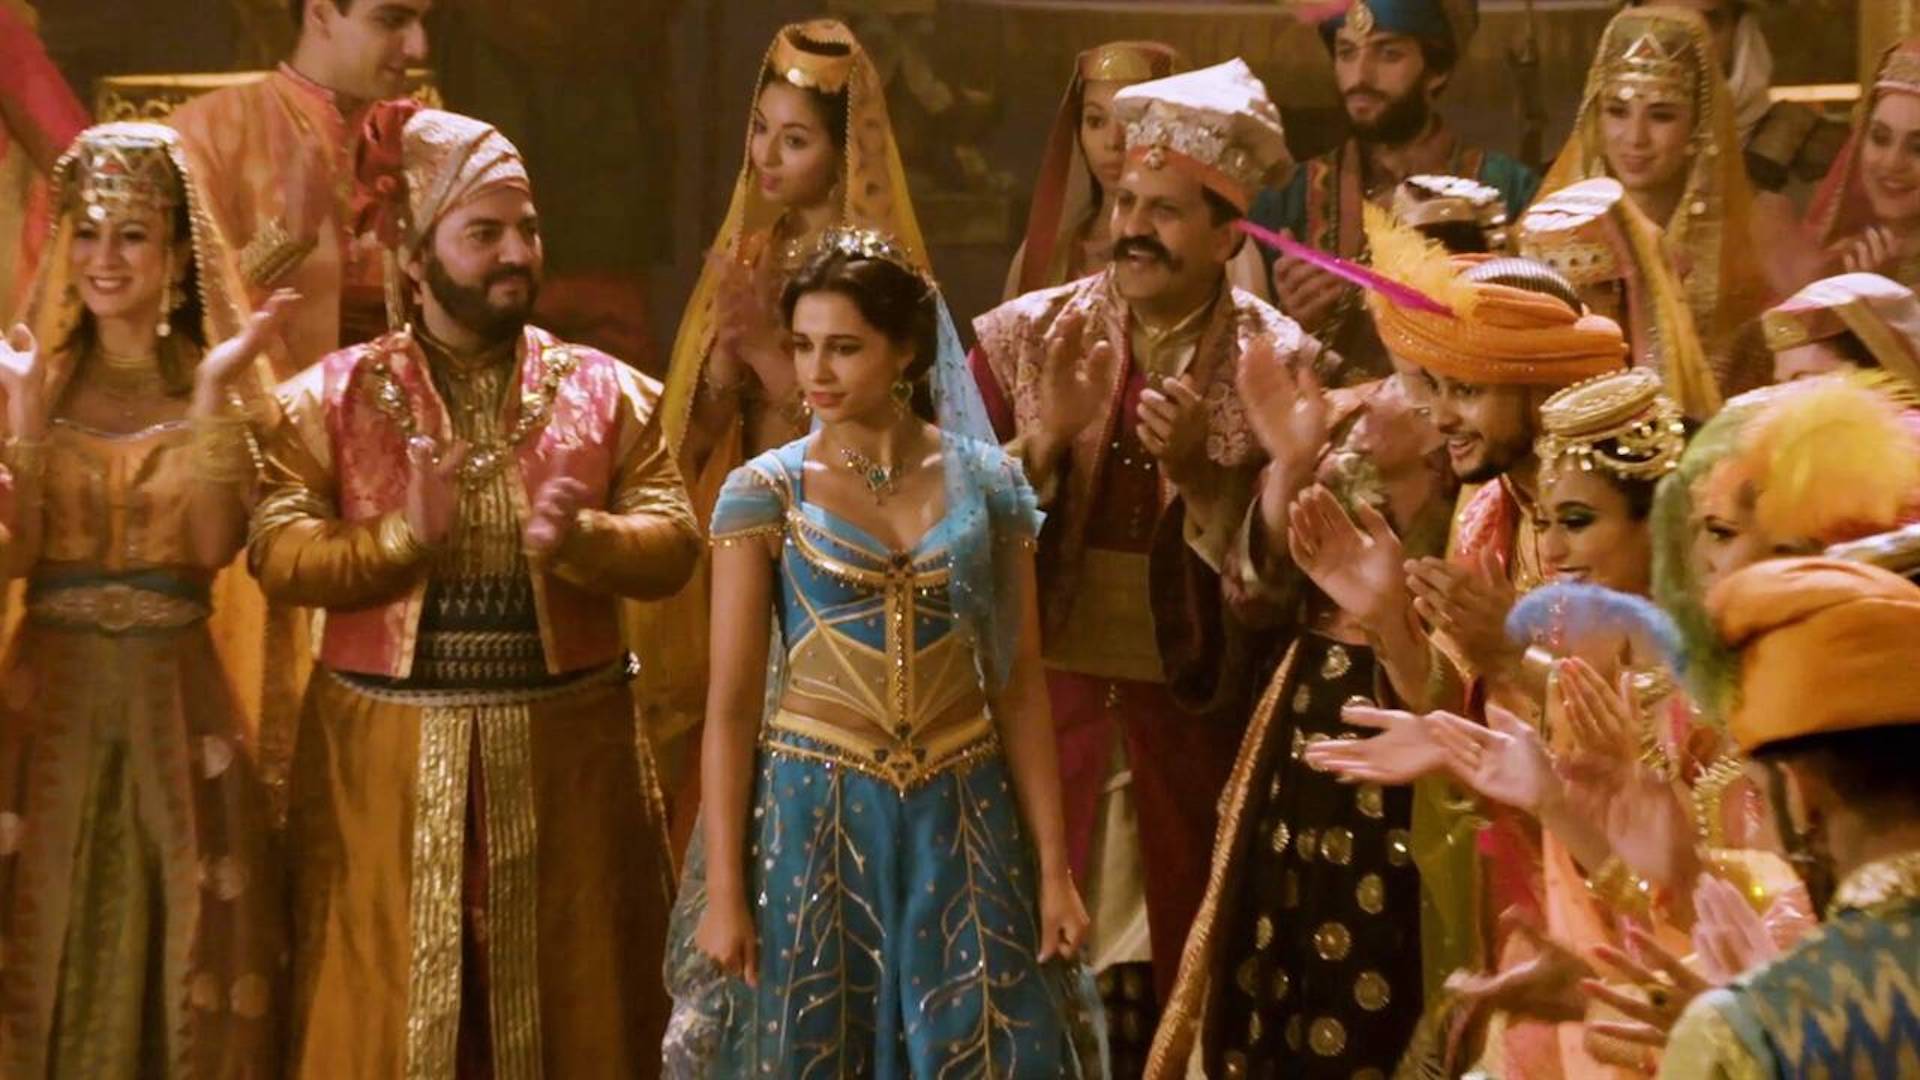 A scene from the 2019 Disney film, Aladdin